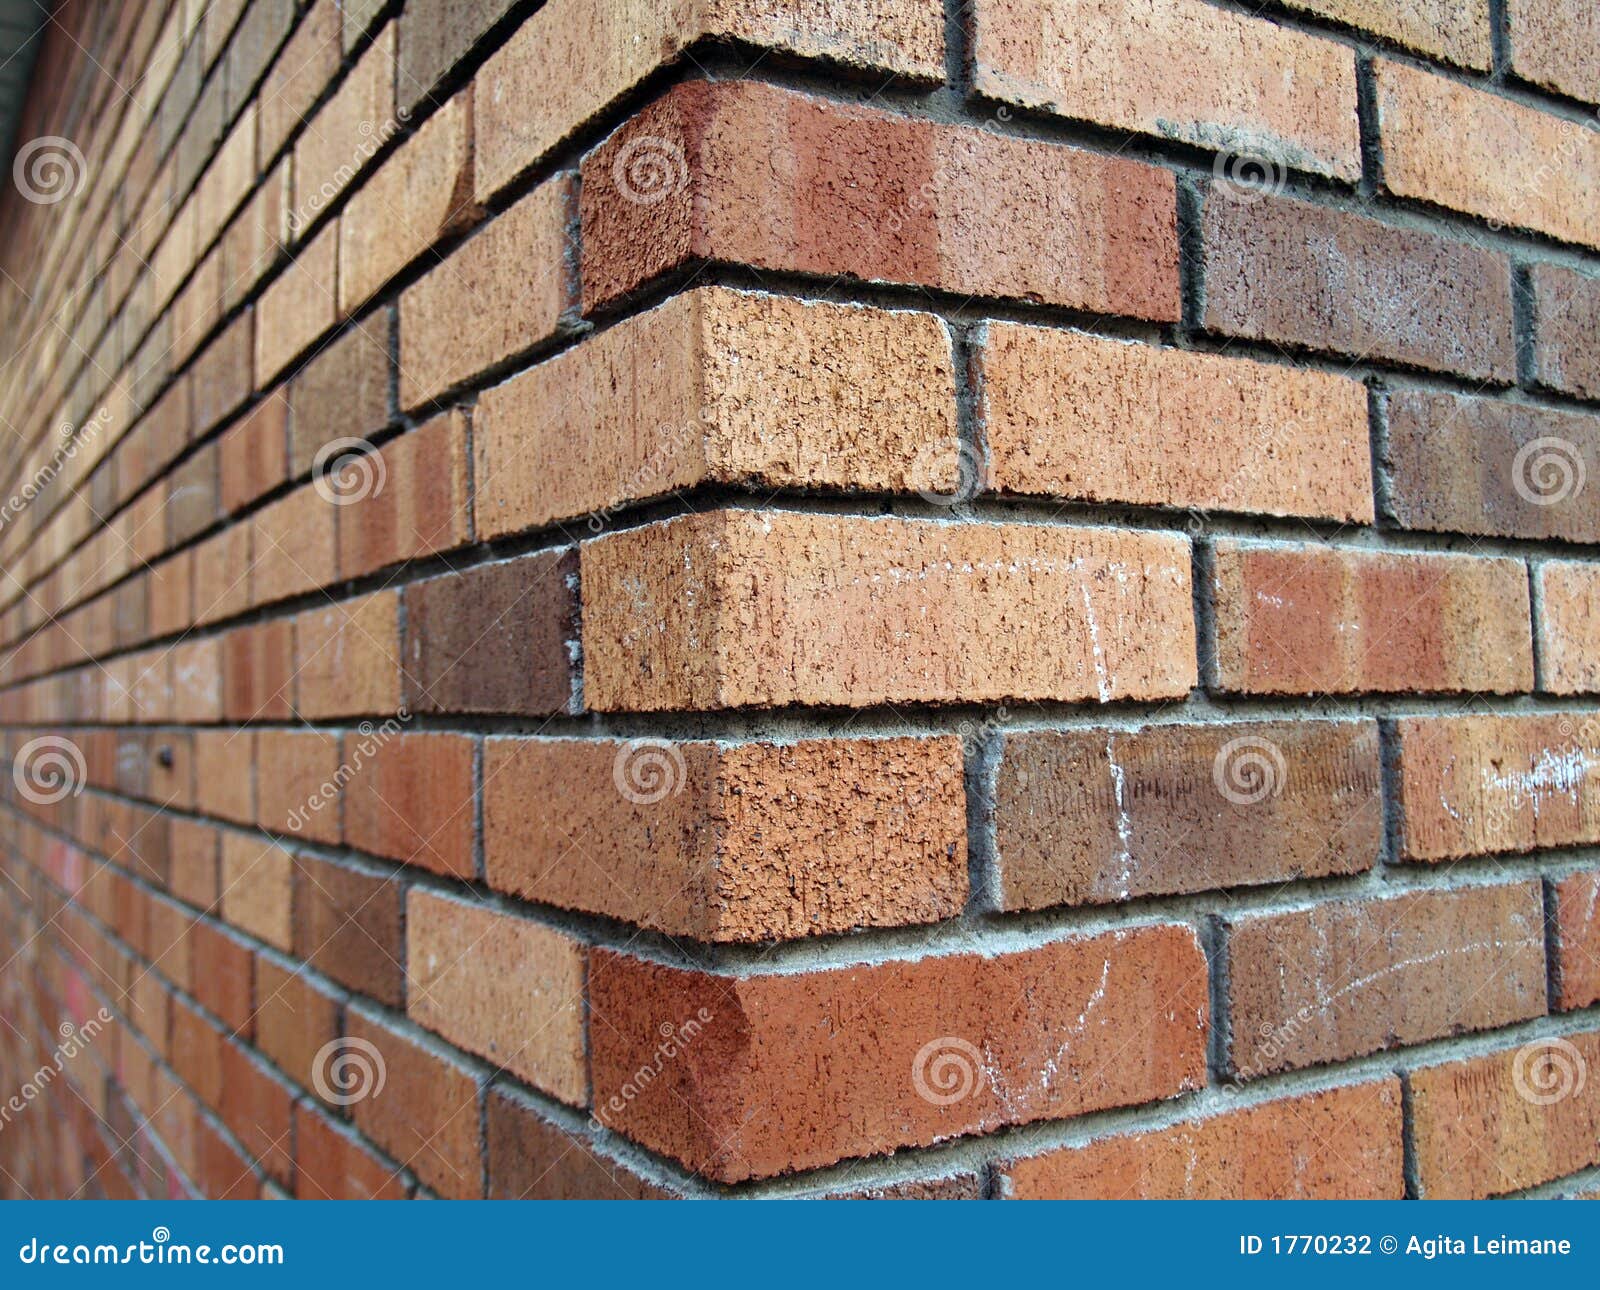 brick-corner-1770232.jpg